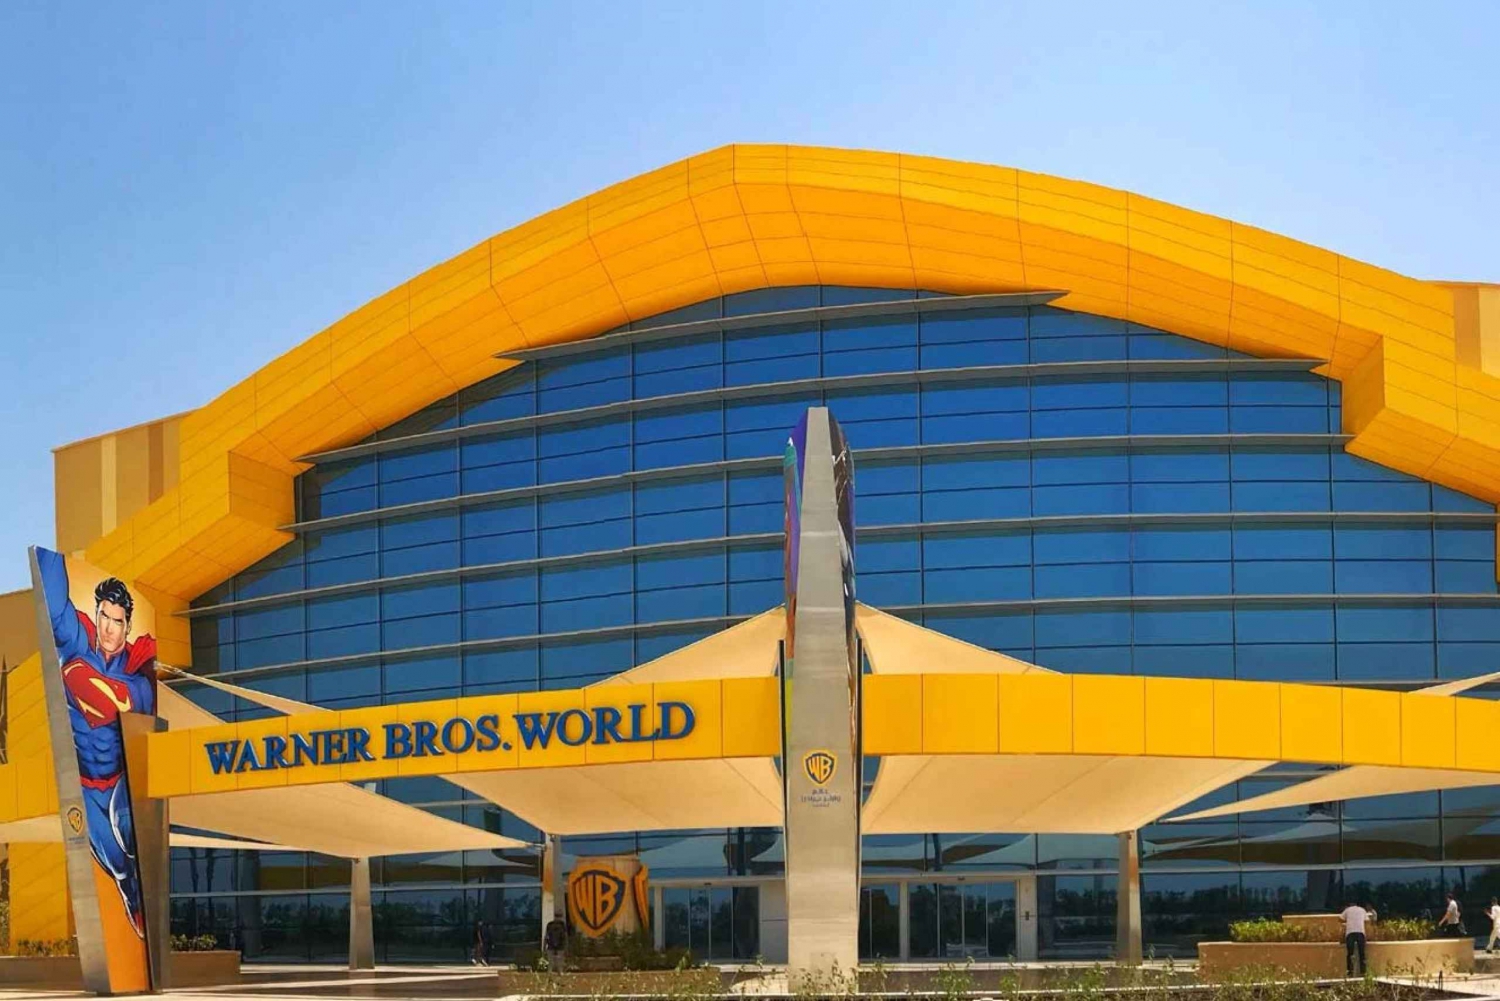 From Dubai: Abu Dhabi City tour with Warner Bros Tickets